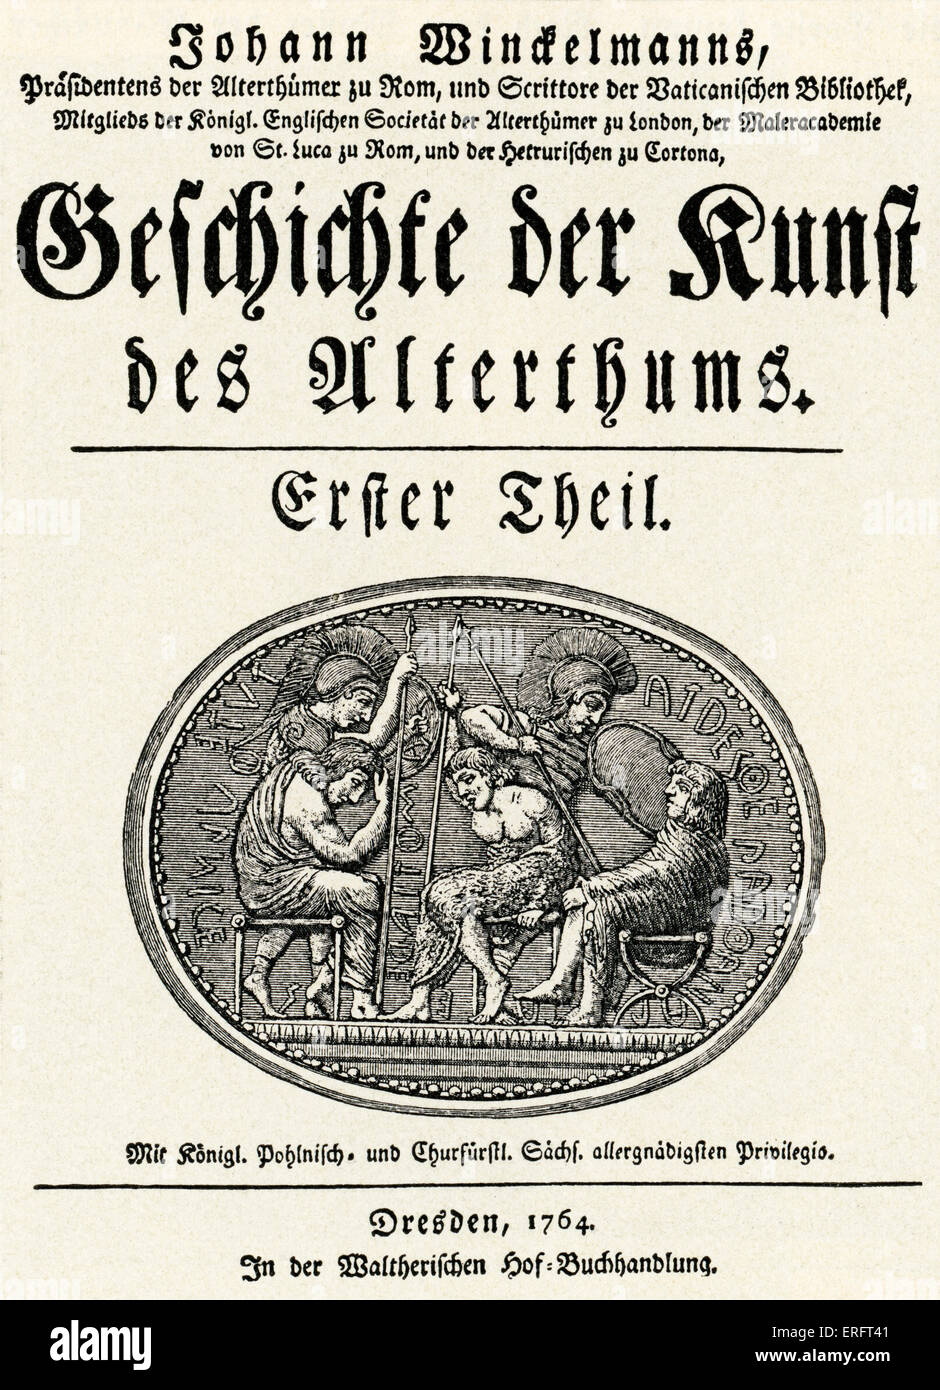 'Geschichte der Kunst des Altertums' (The History of Ancient Art) - book by Johann Joachim Winckelmann. Title page of the first Stock Photo